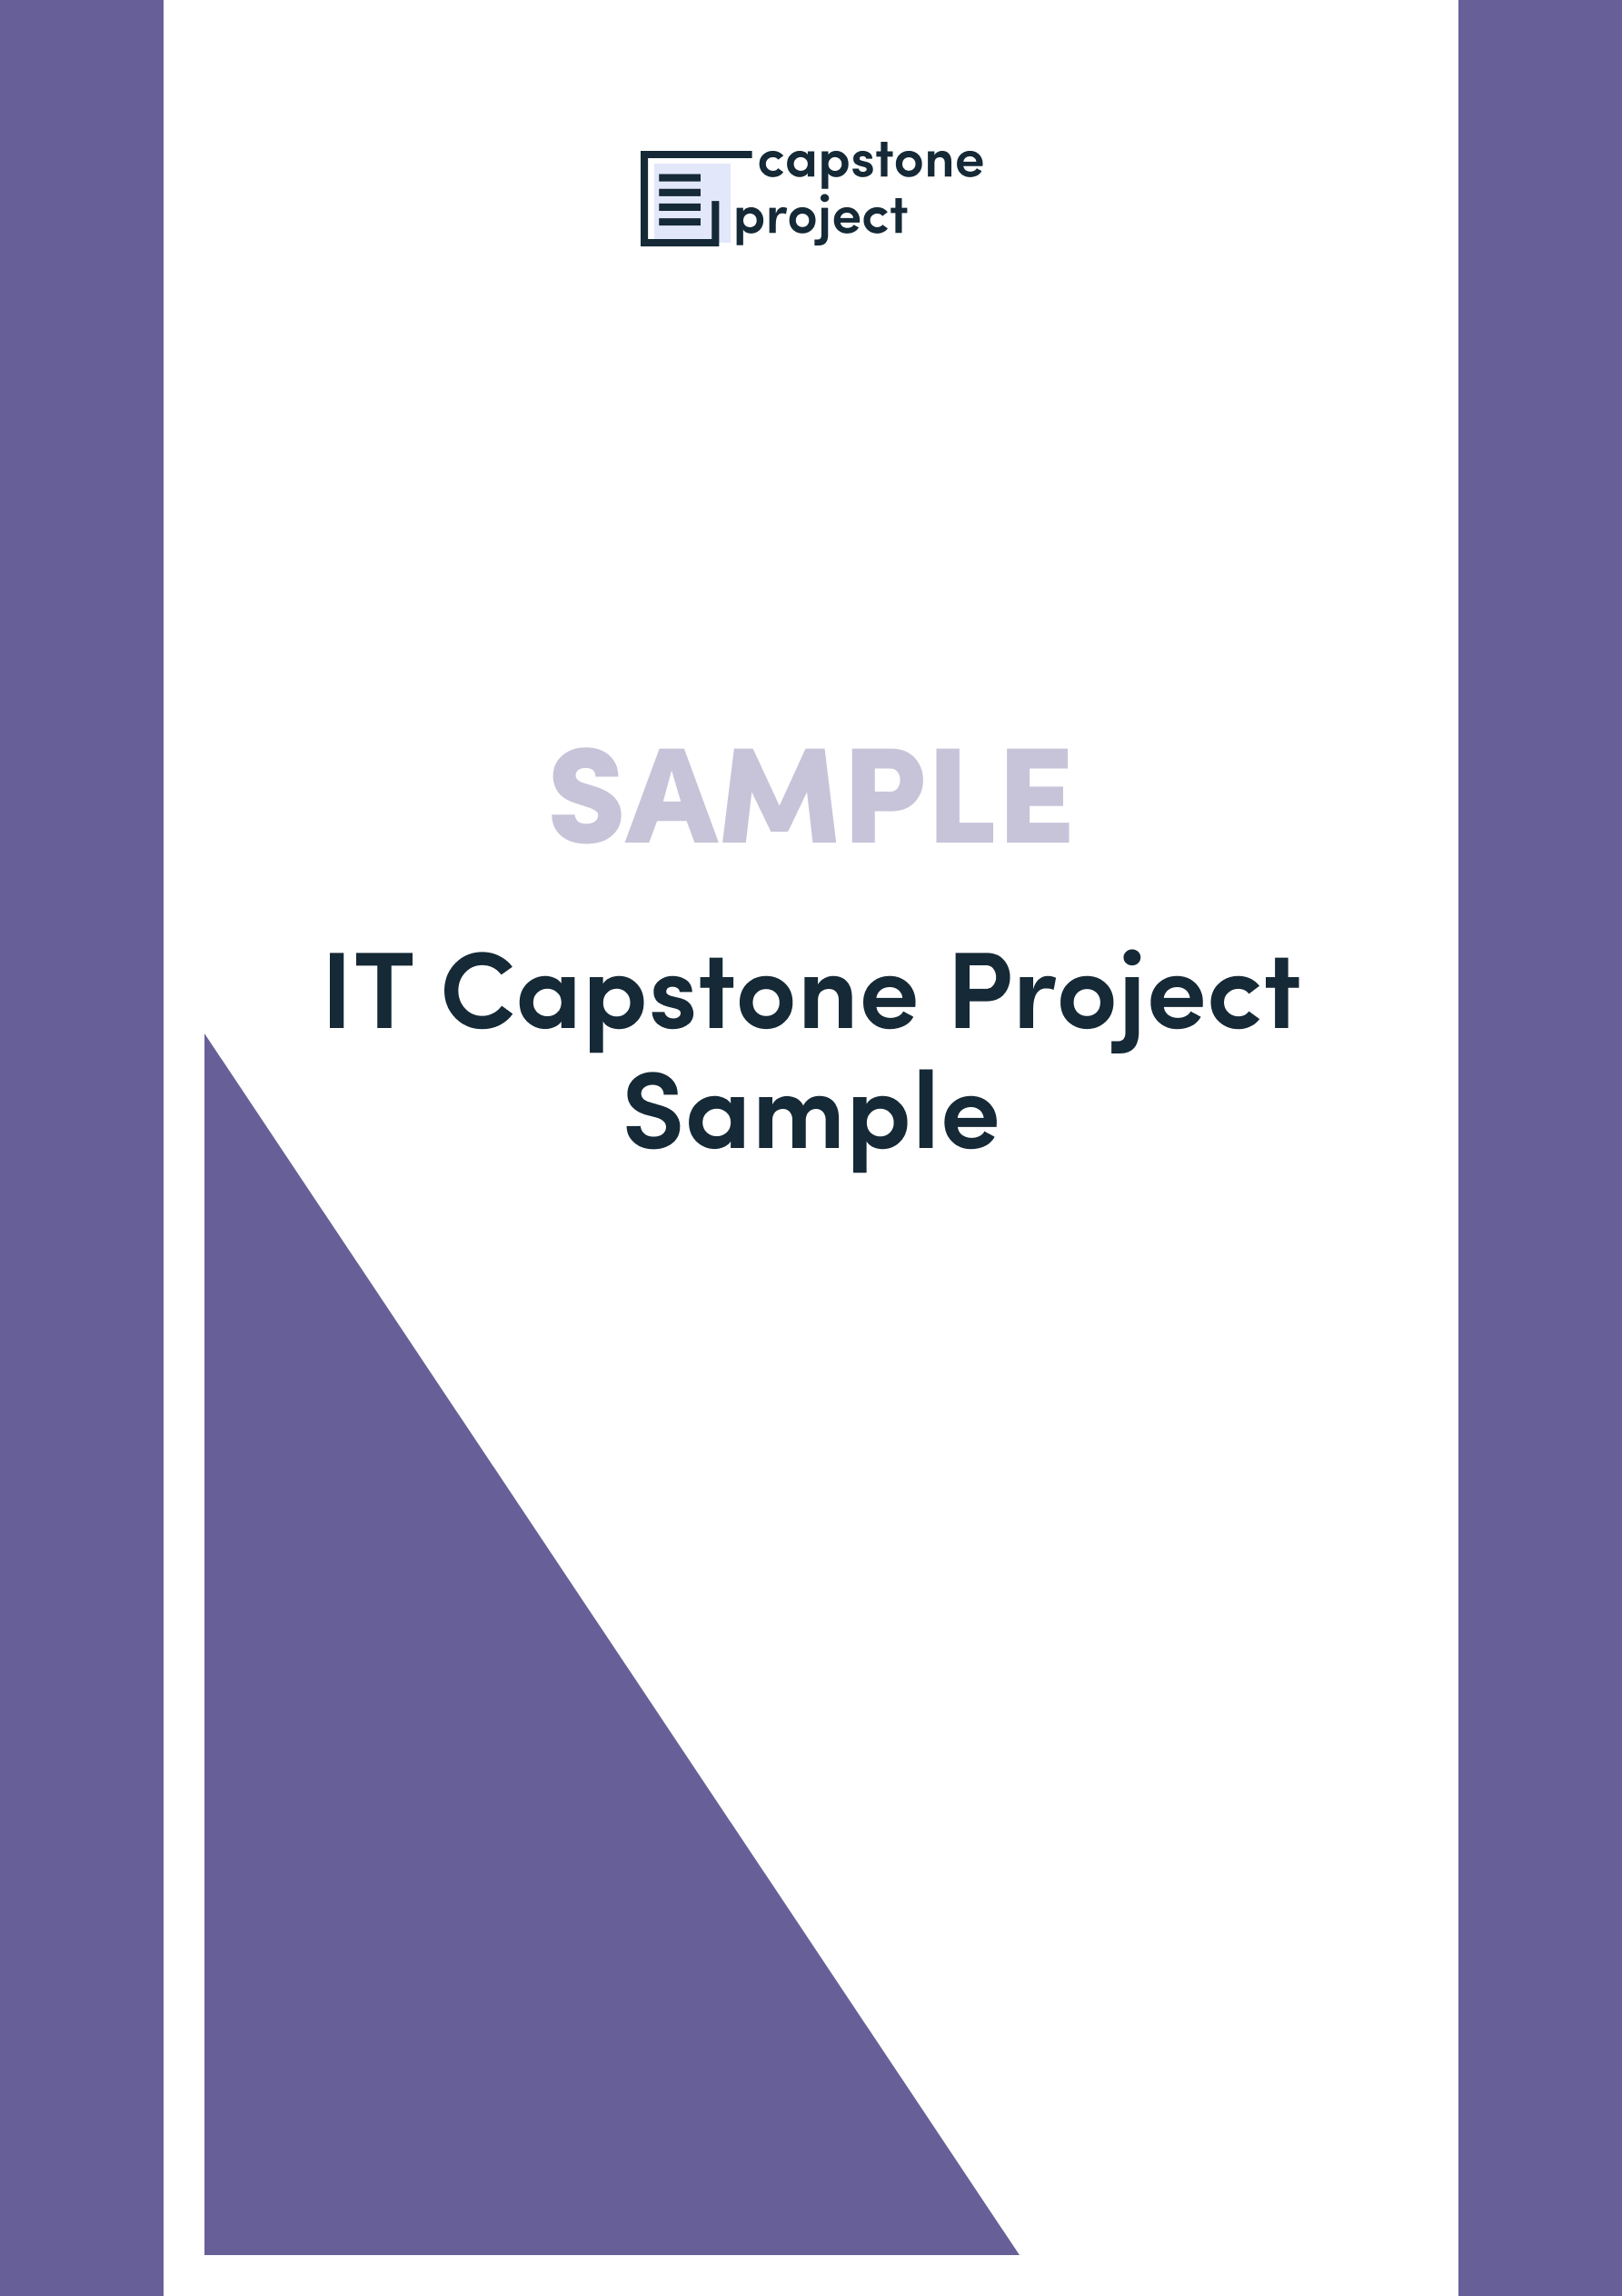 capstone project on linkedin